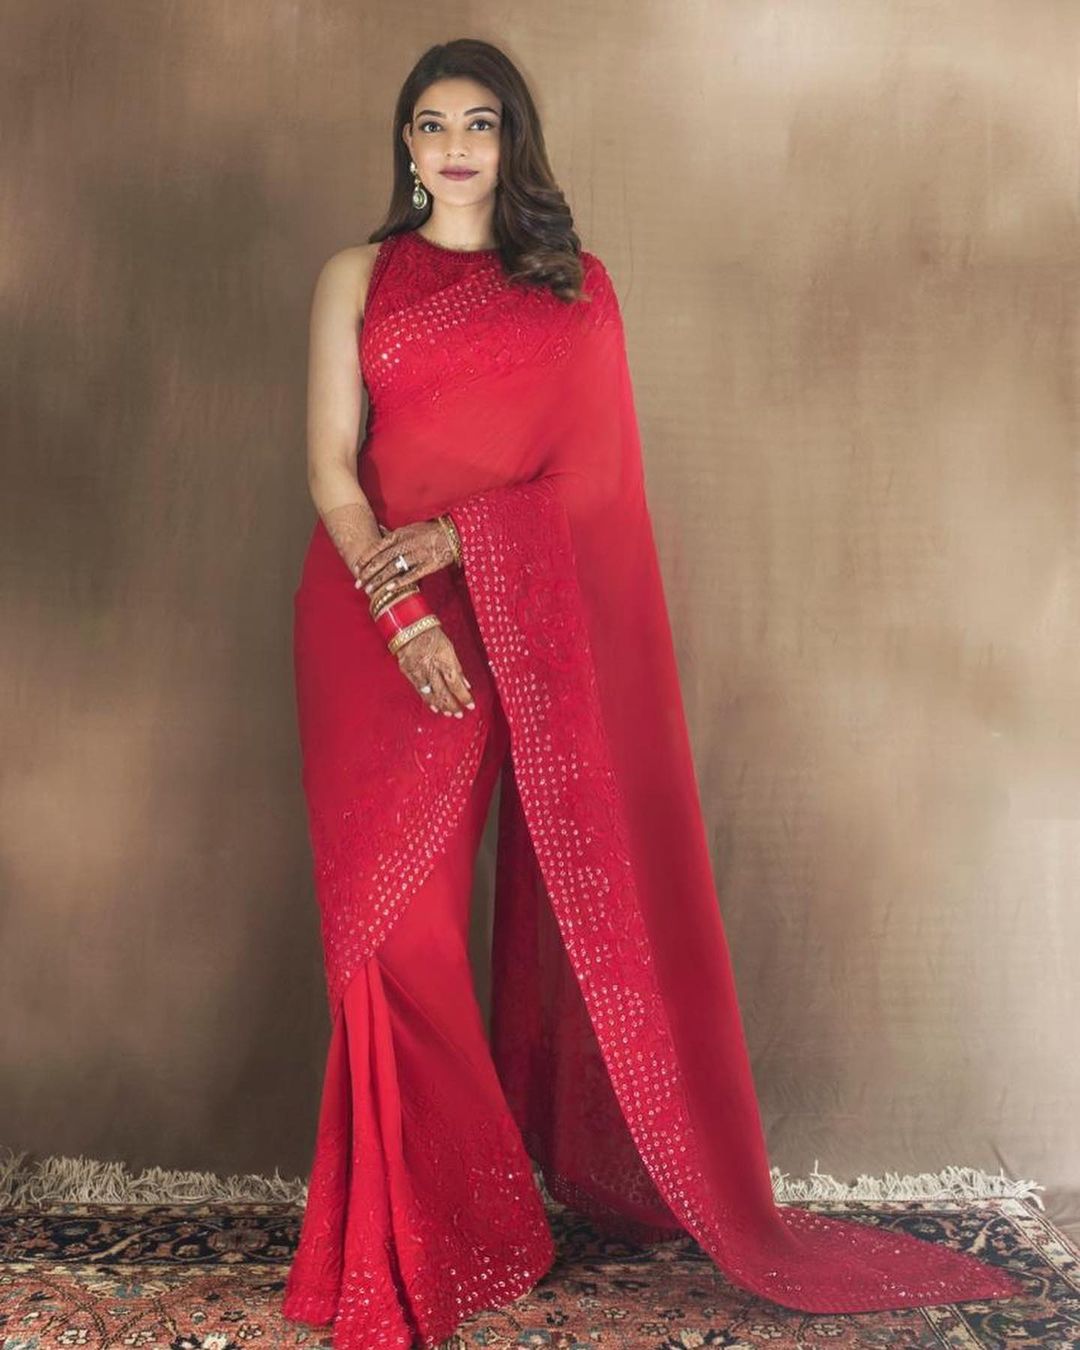 Kajal Aggarwal's Diwali look in red plain saree